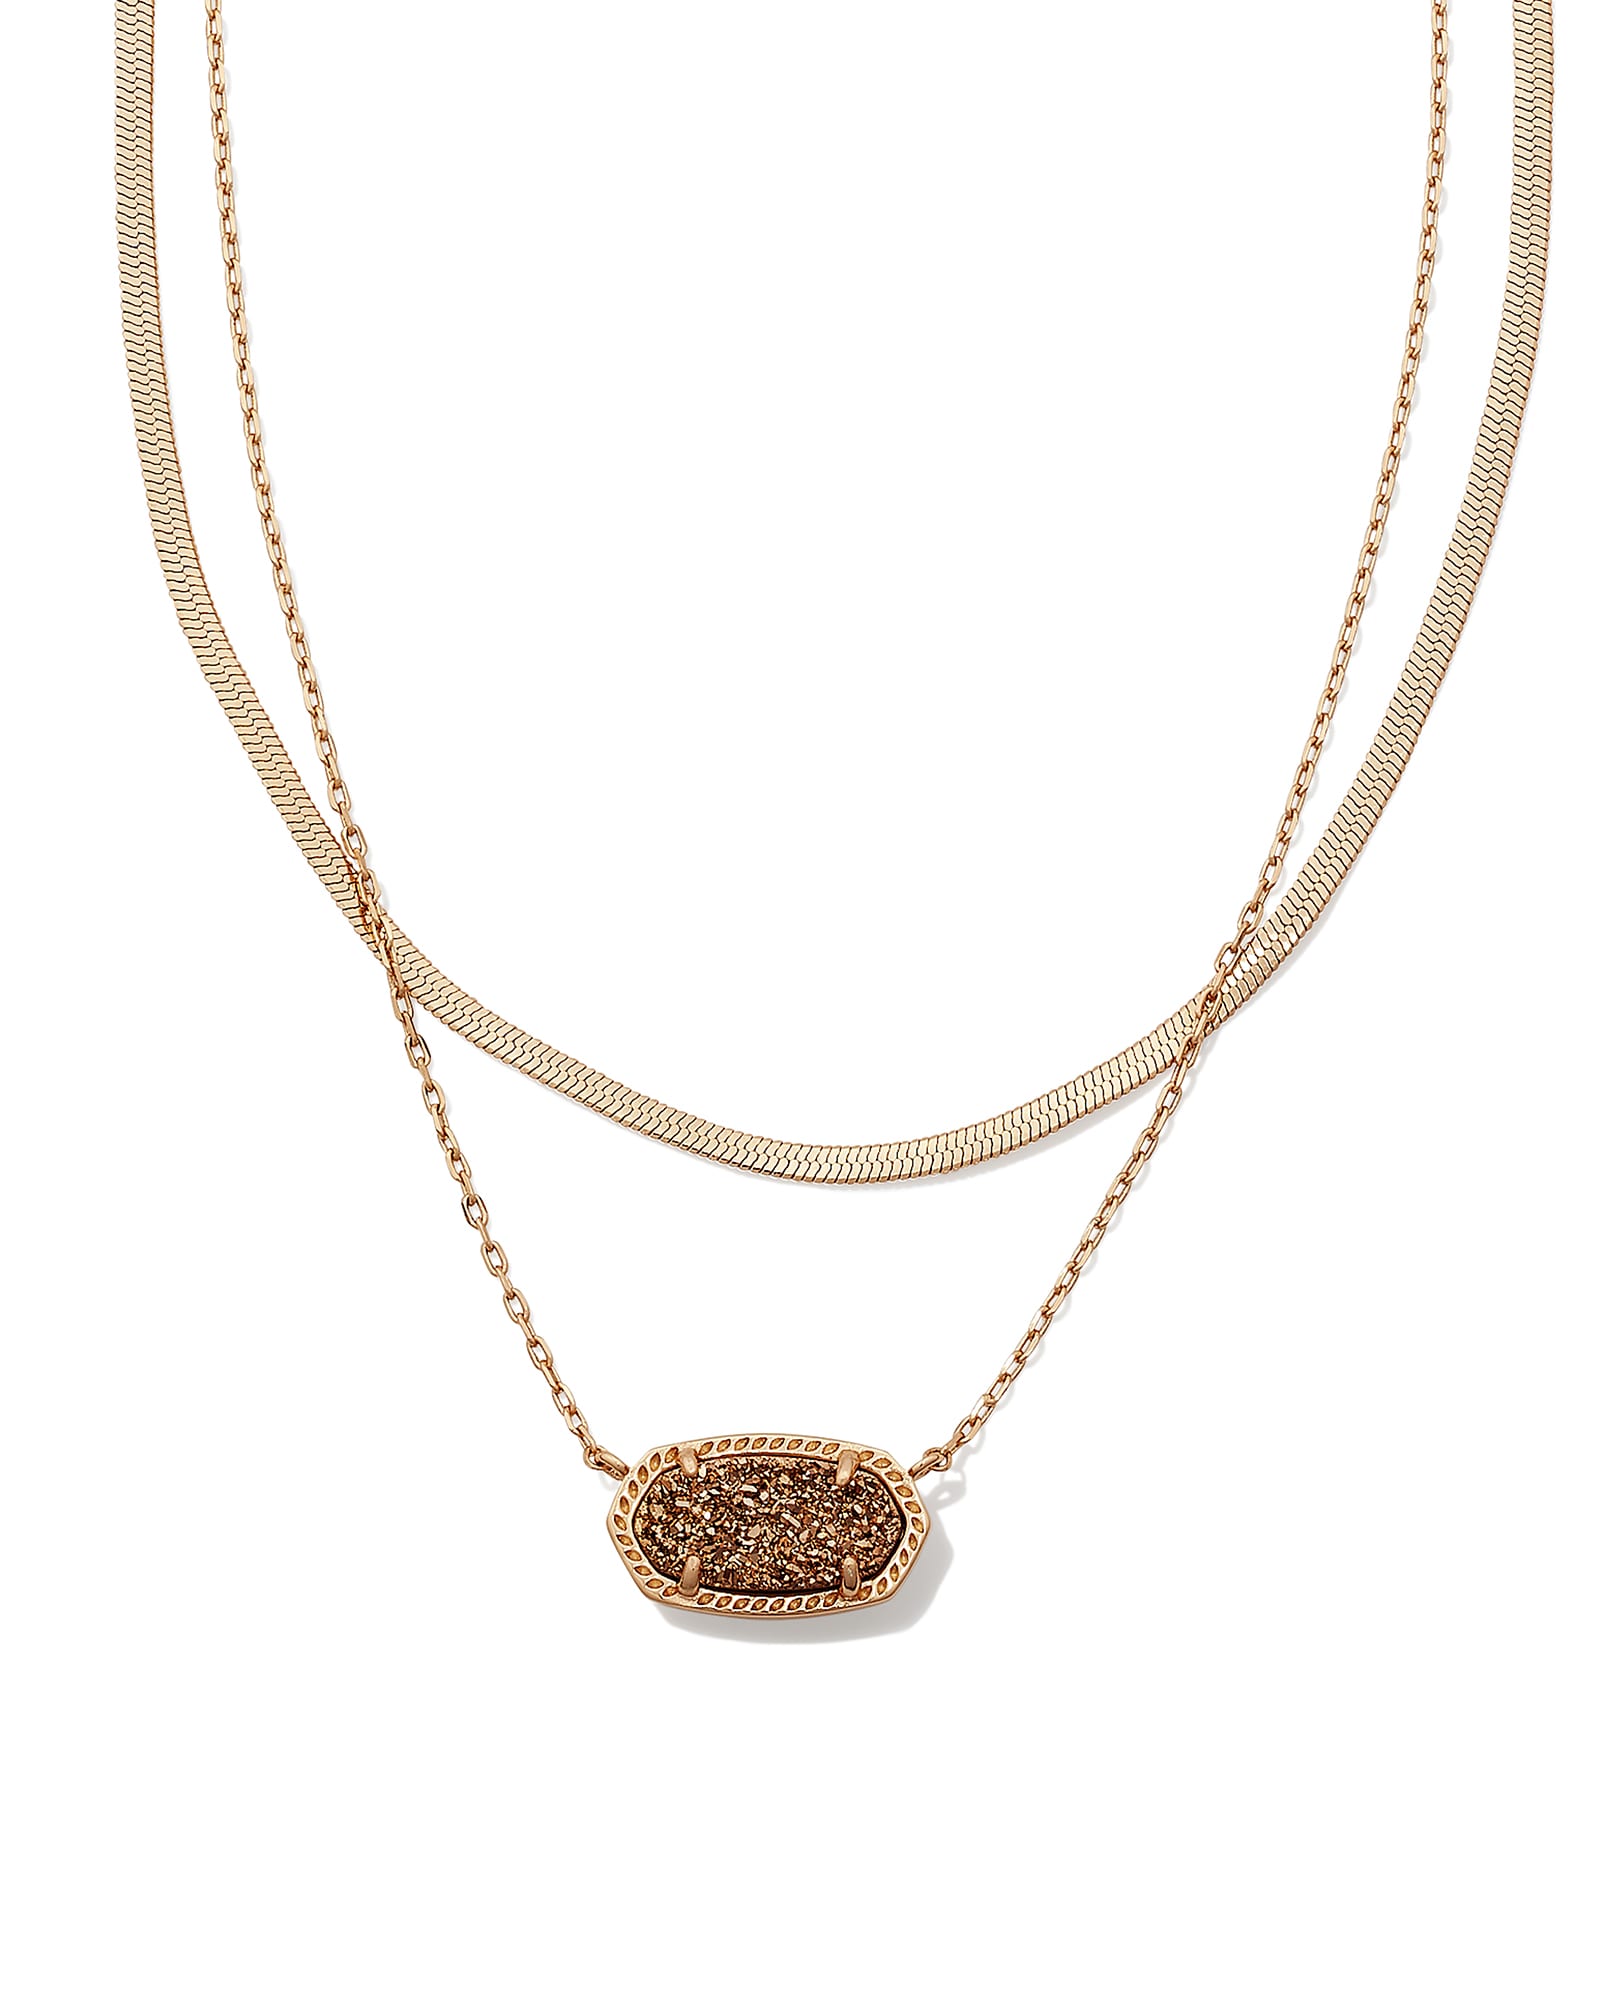 Kendra Scott Elisa Herringbone Rose Gold Multi Strand Necklace in Rose Gold | Drusy